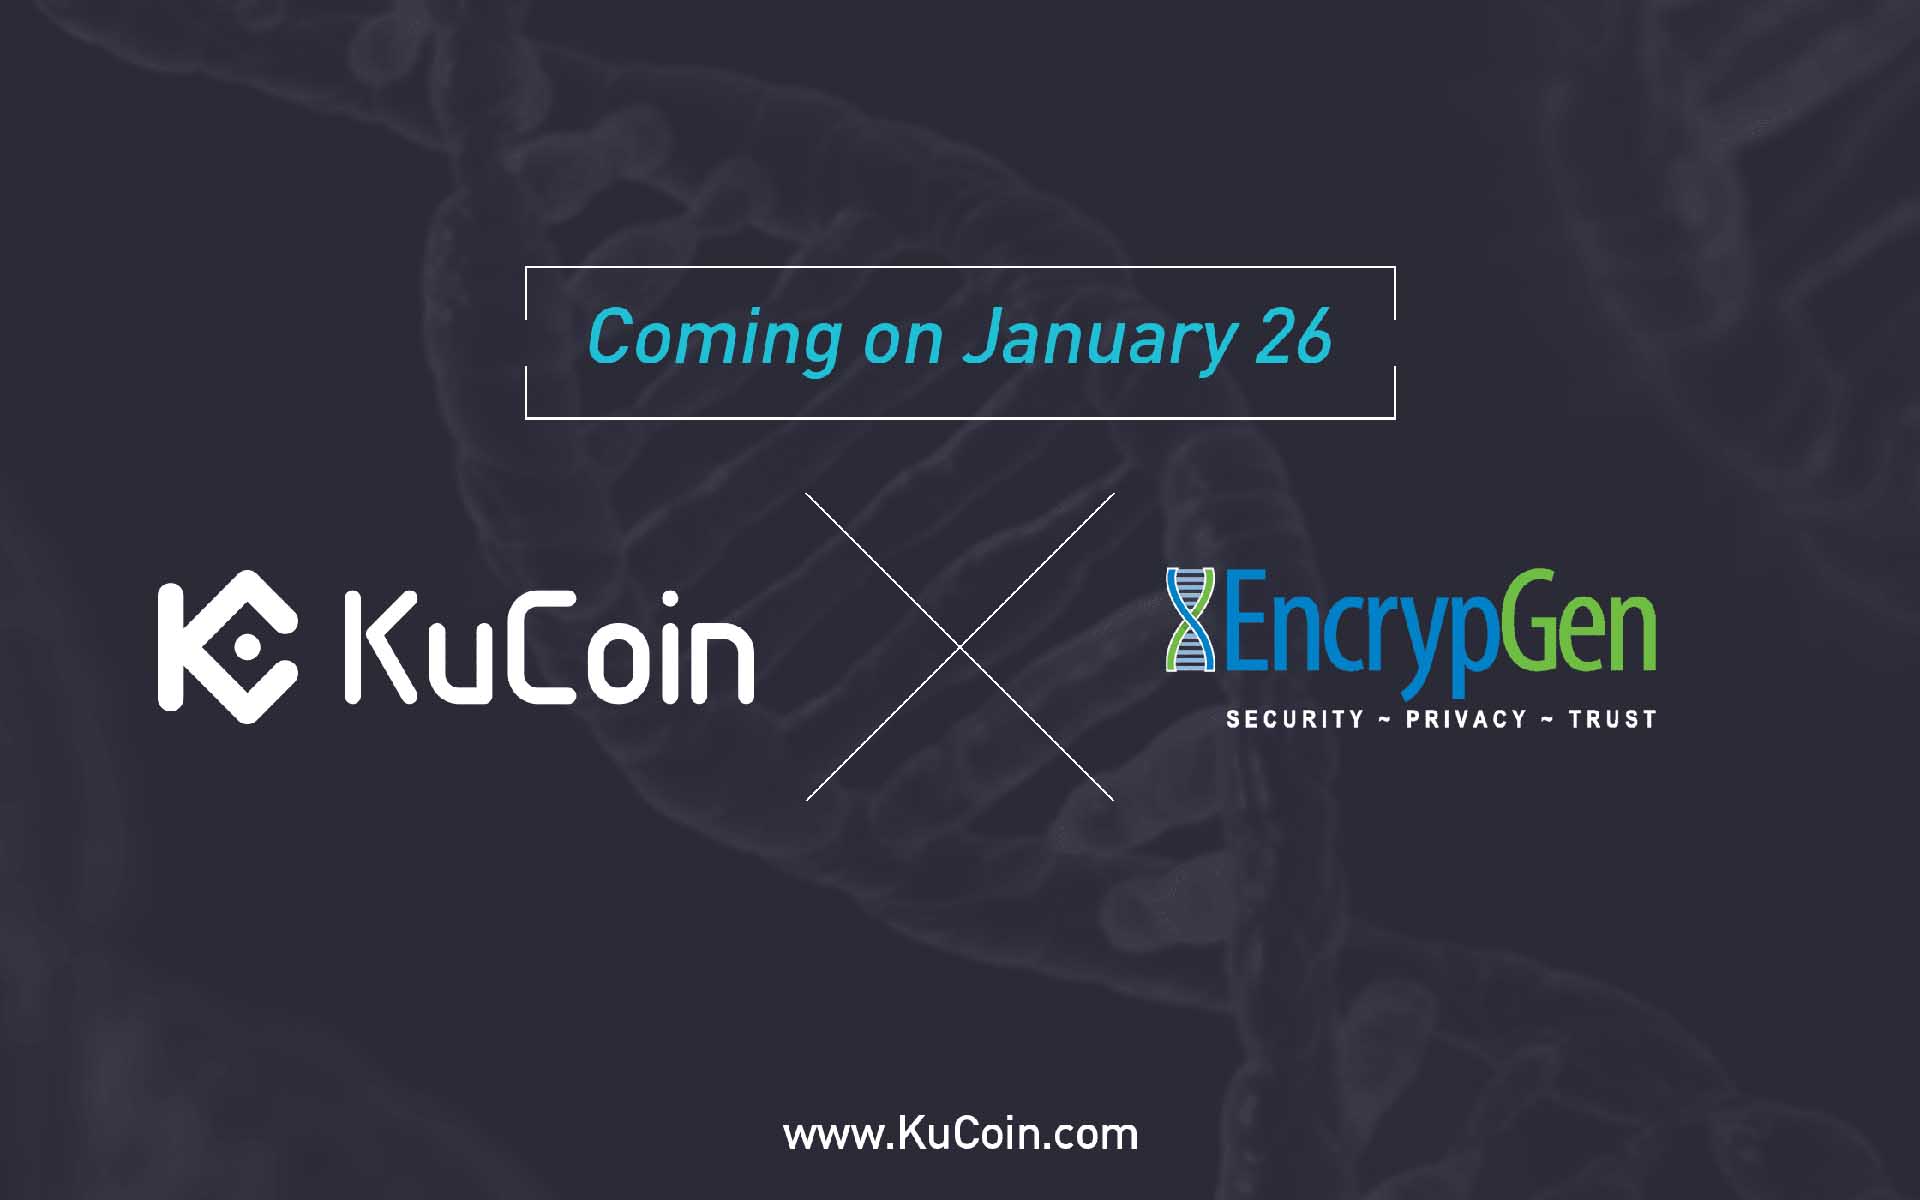 EncrypGen (DNA) Gets List on Kucoin！